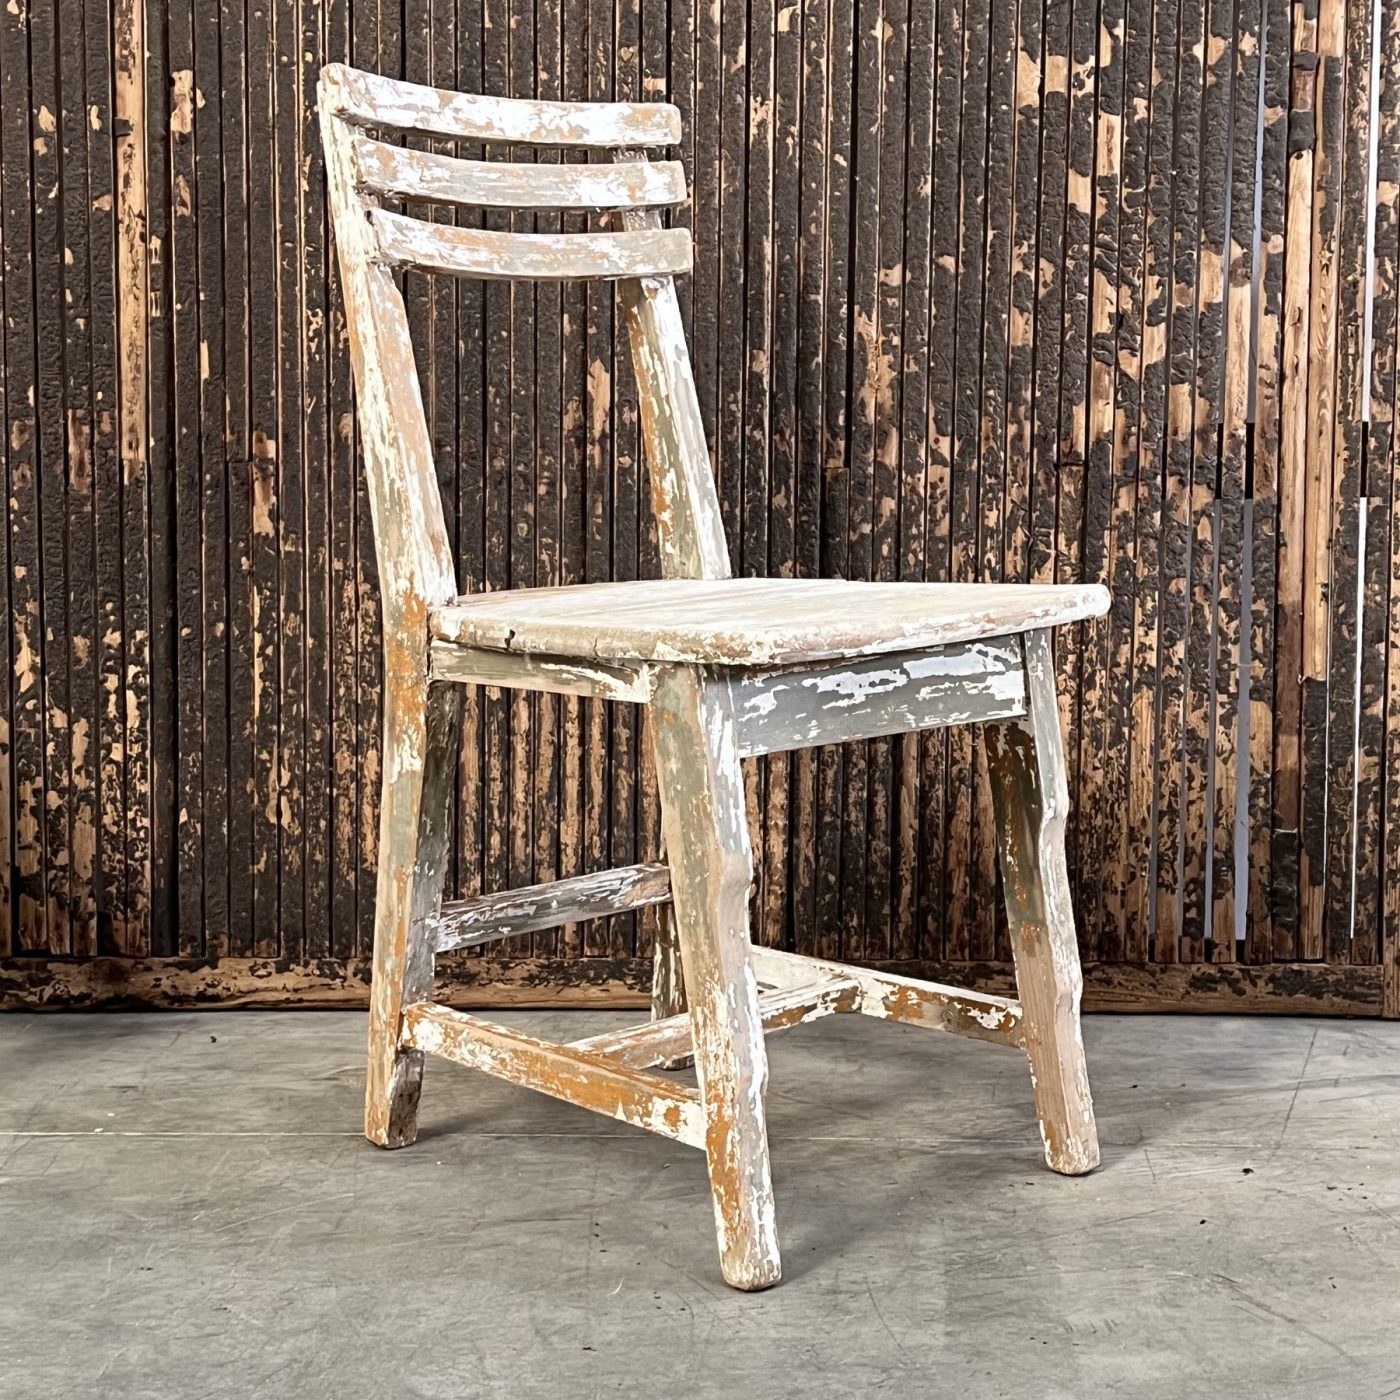 objet-vagabond-painted-chairs0005